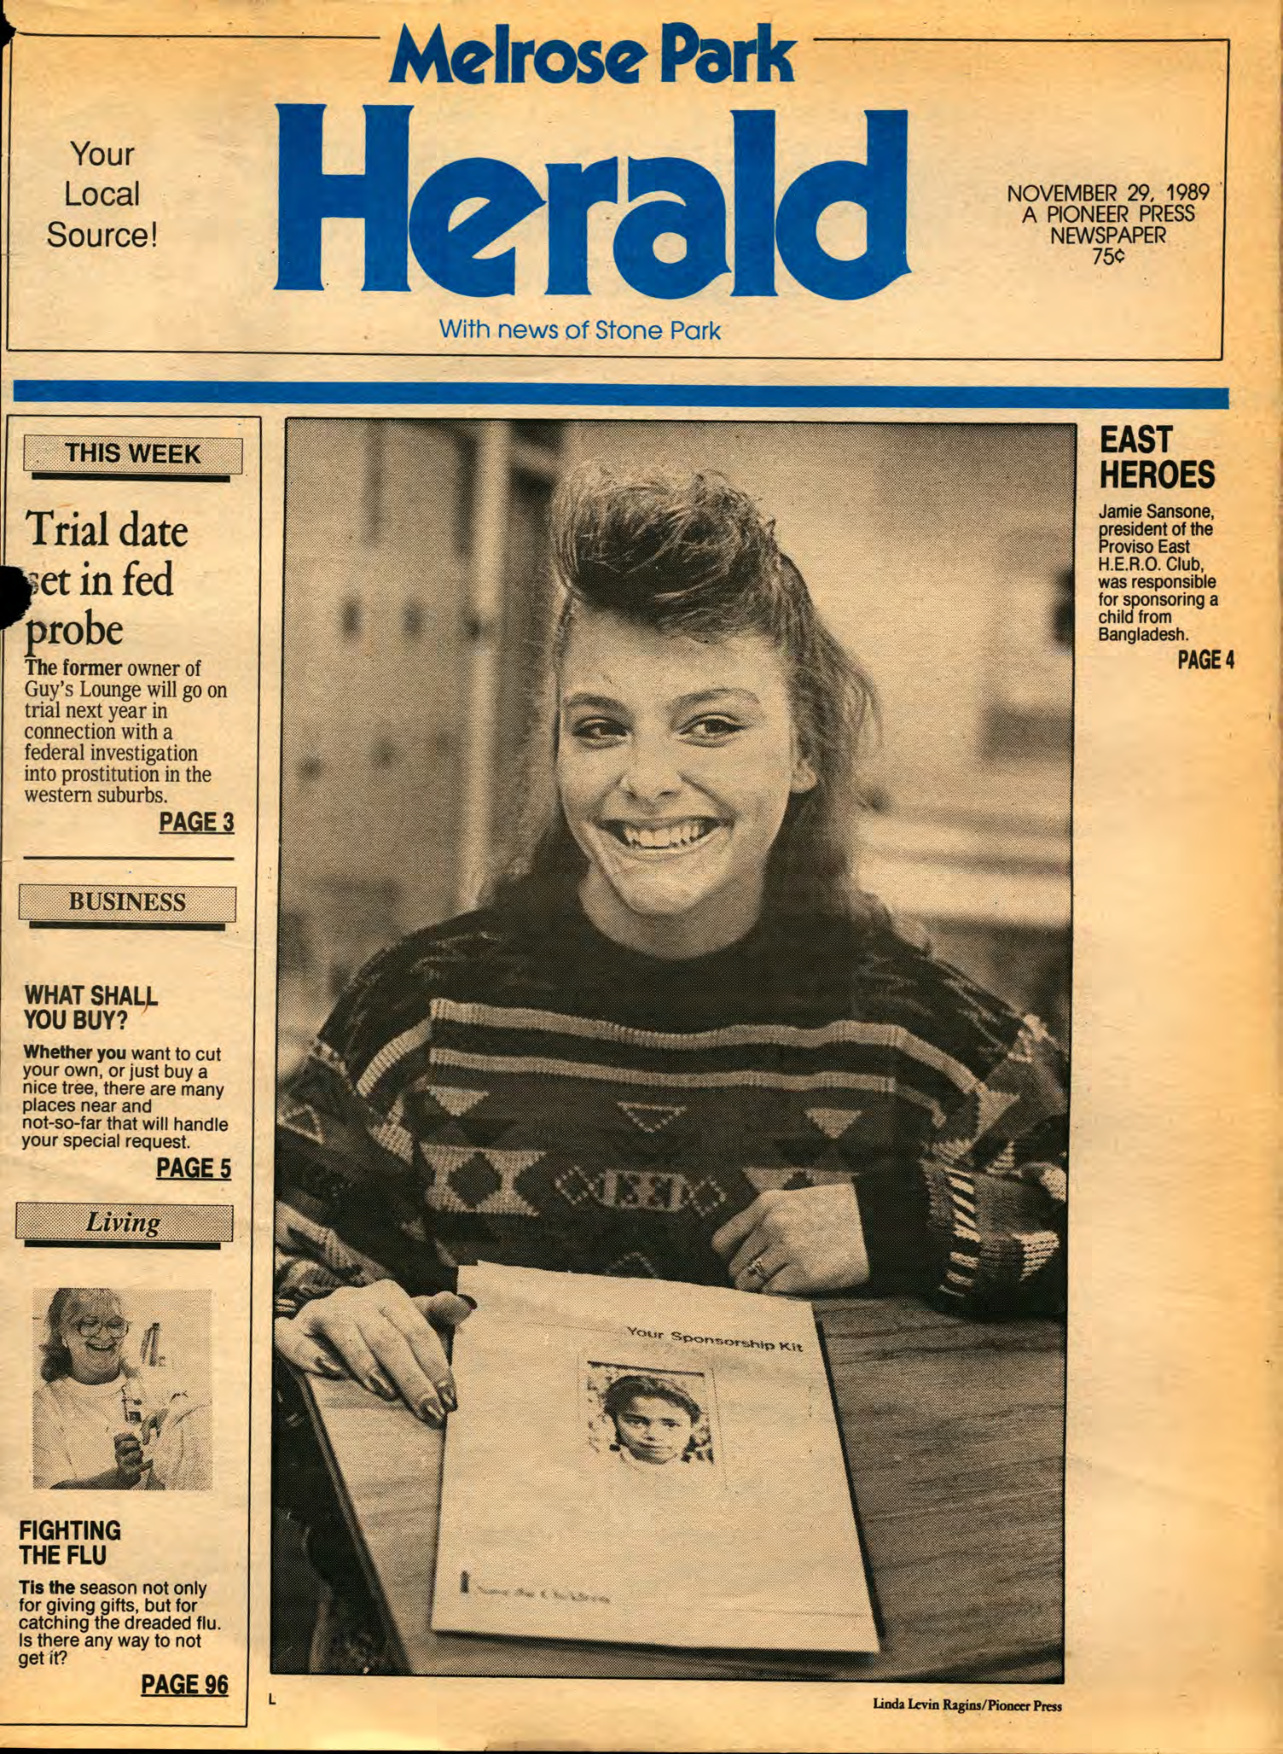 The Herald – 19891129